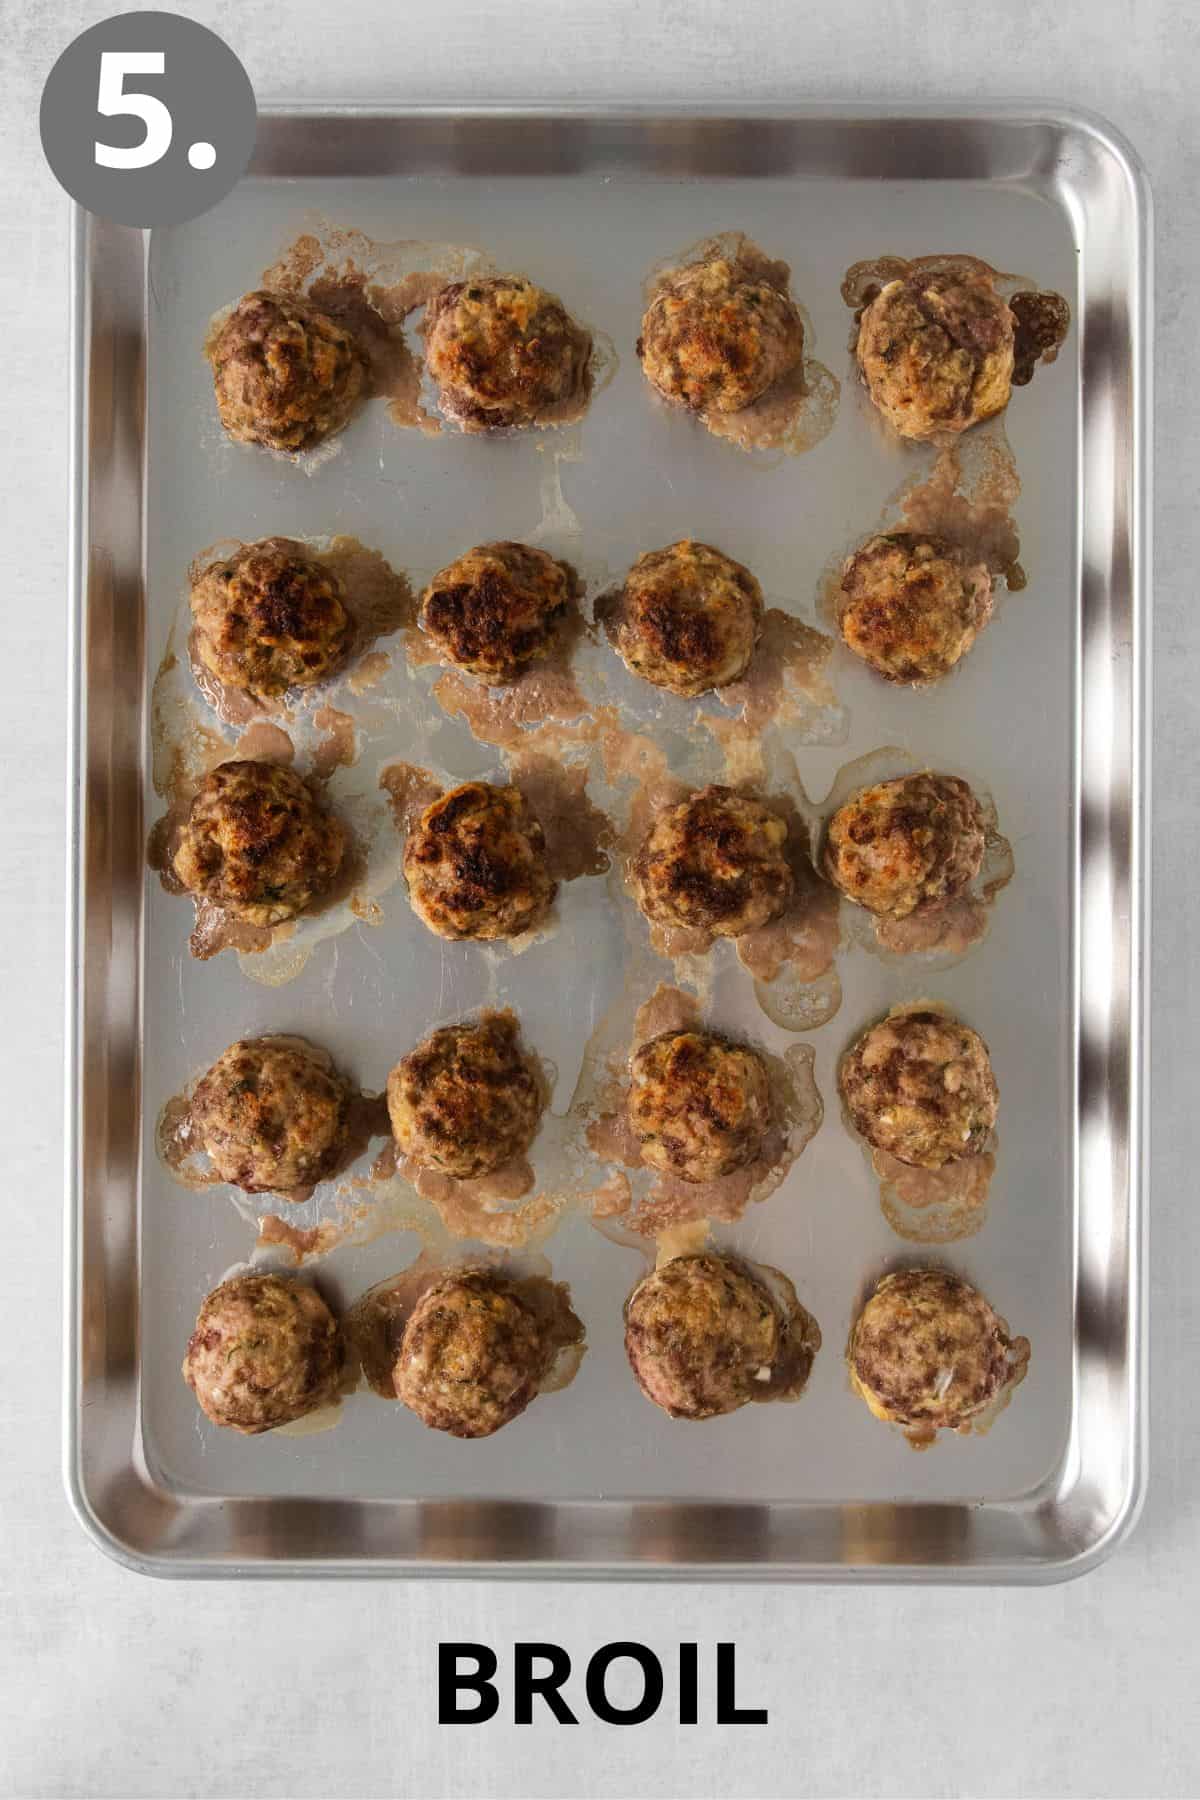 Broiled gluten-free meatballs